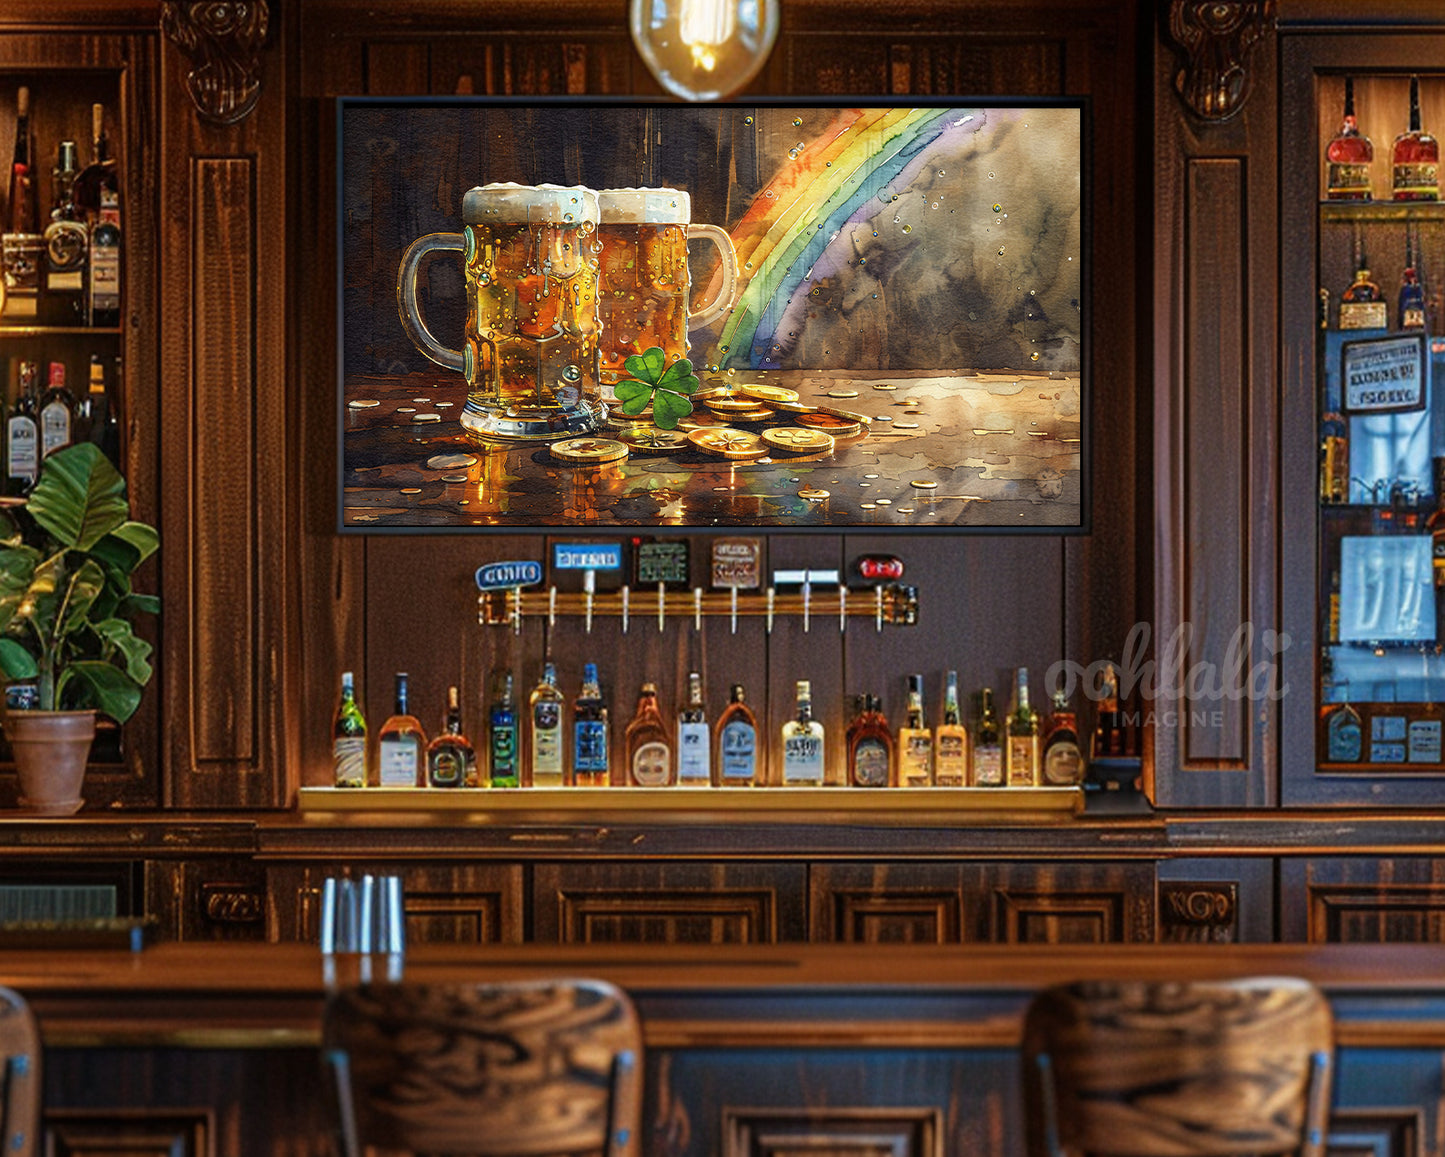 Frame TV Art St. Patrick's Day Celebration Beer Shamrocks Rainbow Gold Coins Watercolor Painting Paper Texture Home Bars Restaurants Decor